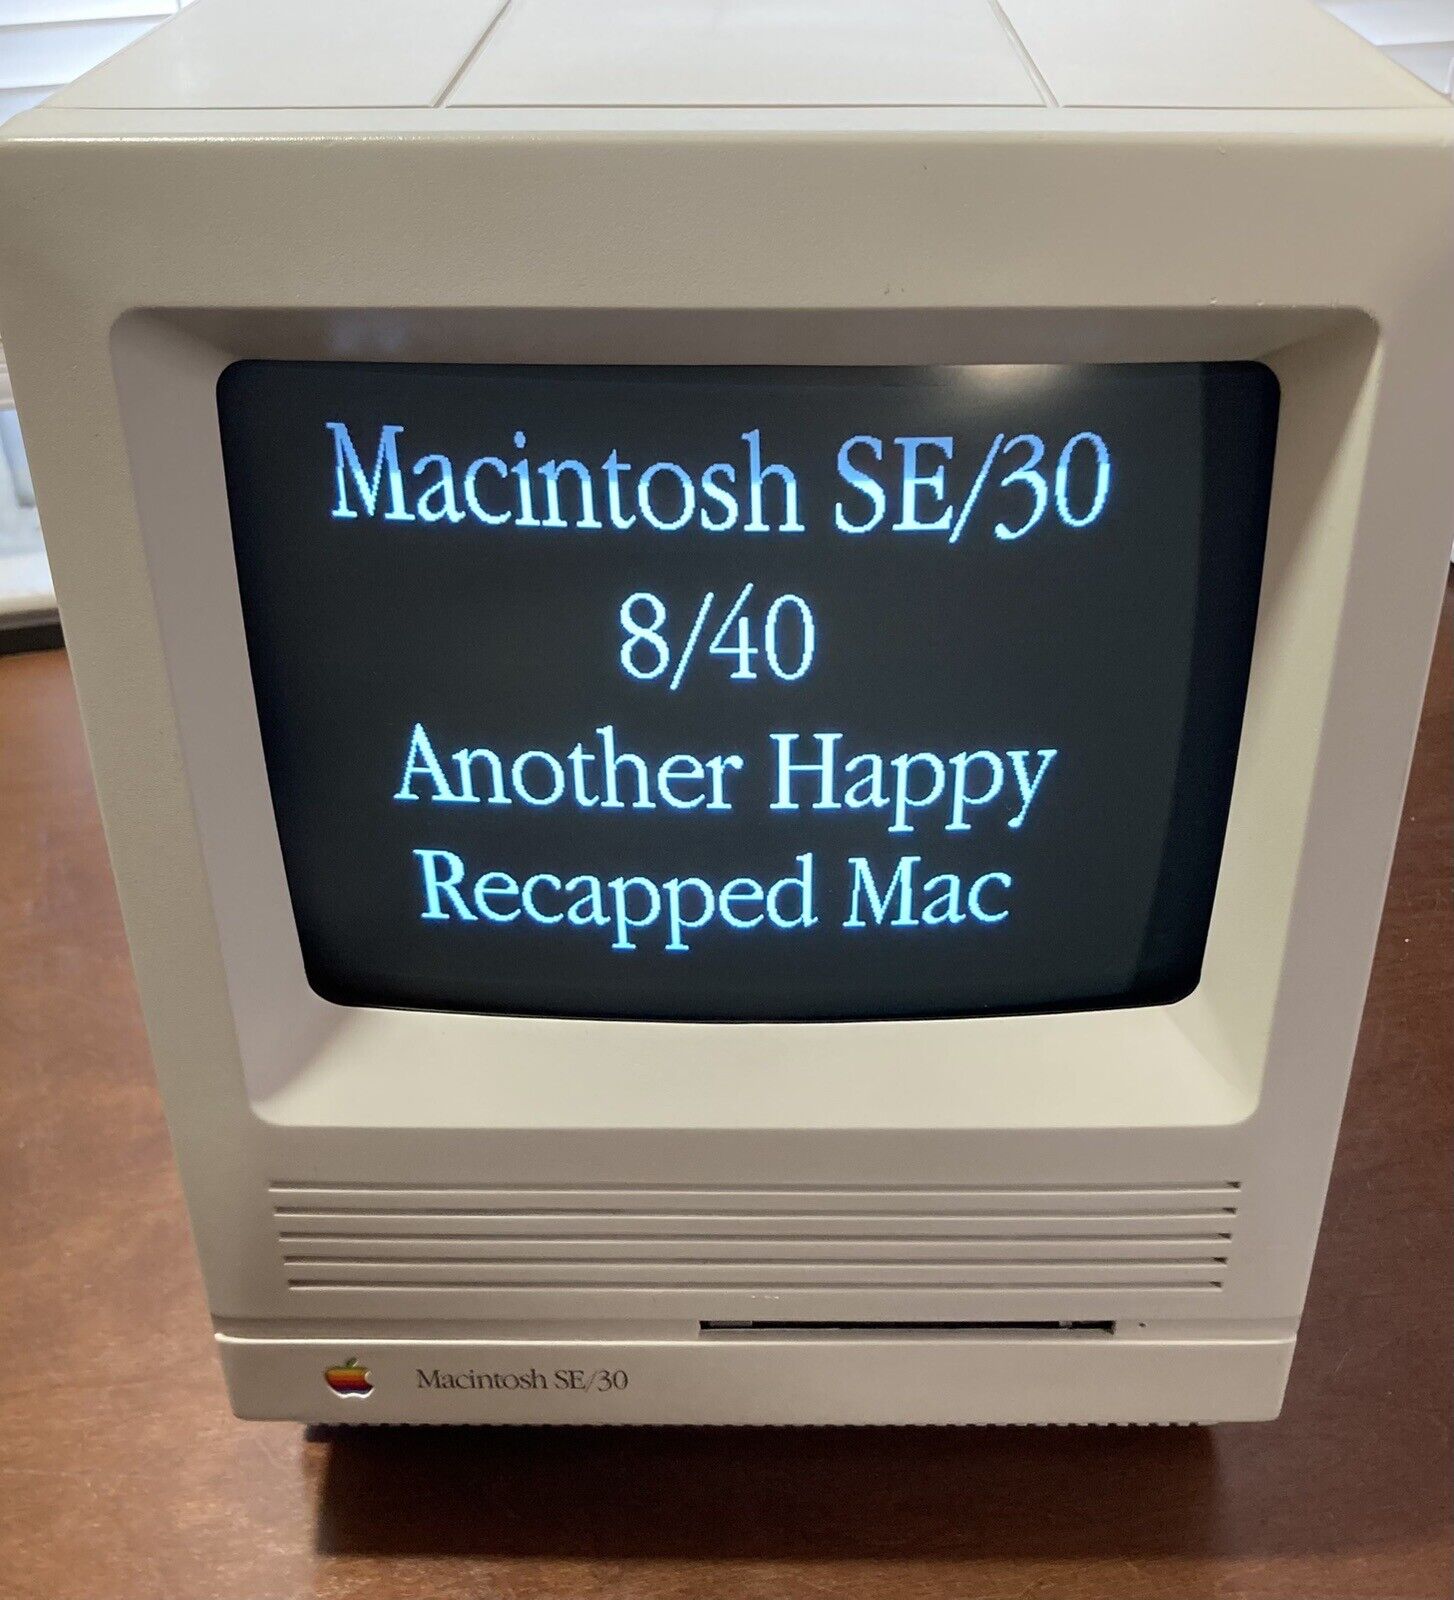 APPLE MACINTOSH SE/30 M5119 Vintage Mac Computer RECAPPED Tested Working 